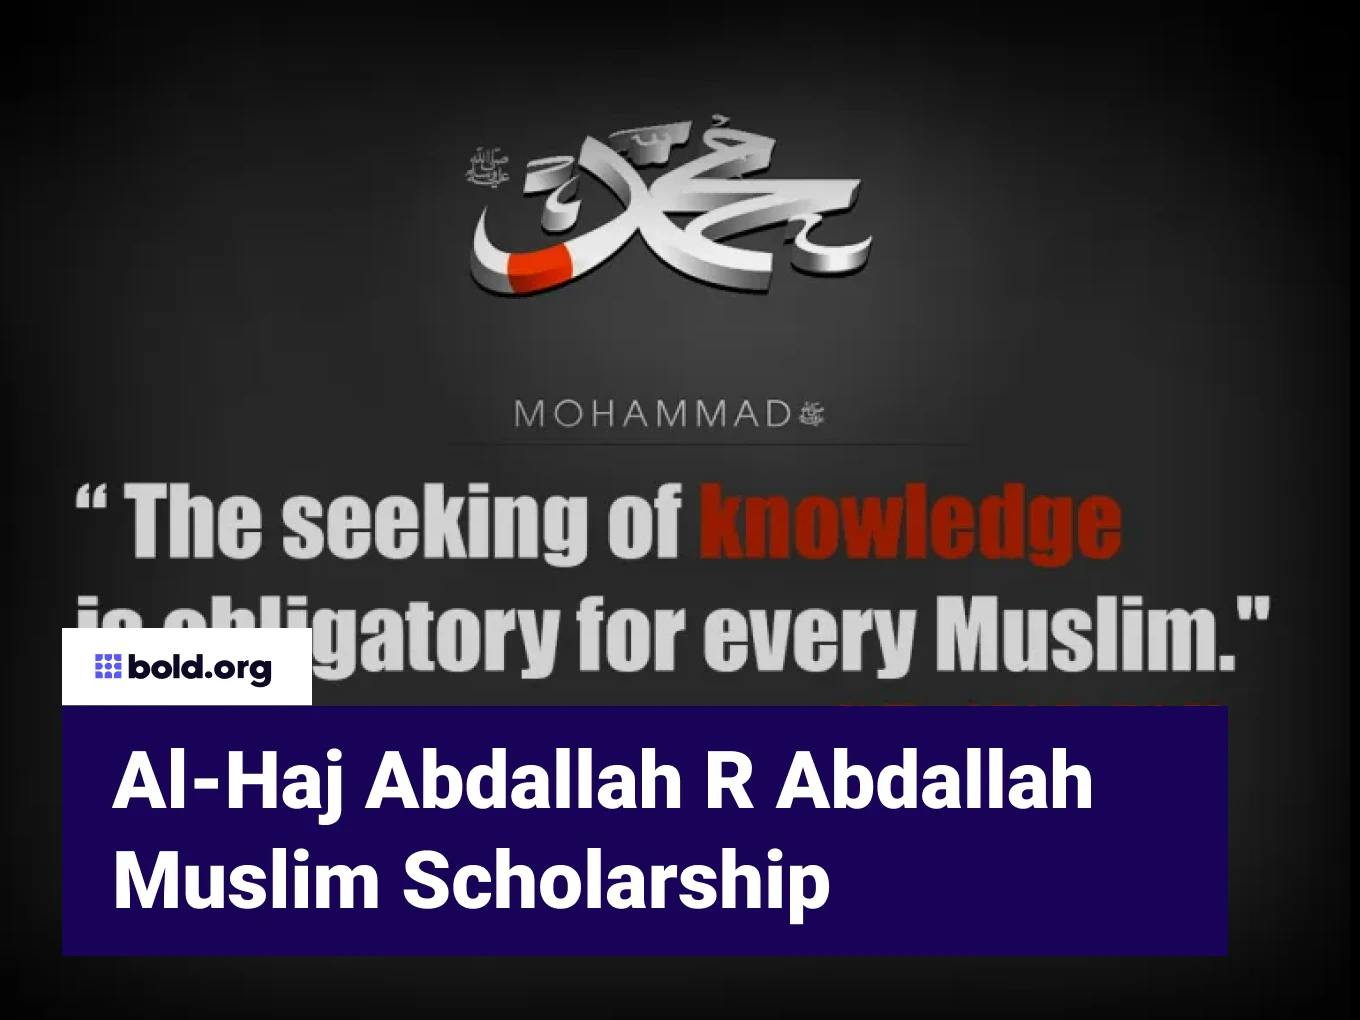 Al-Haj Abdallah R Abdallah Muslim Scholarship